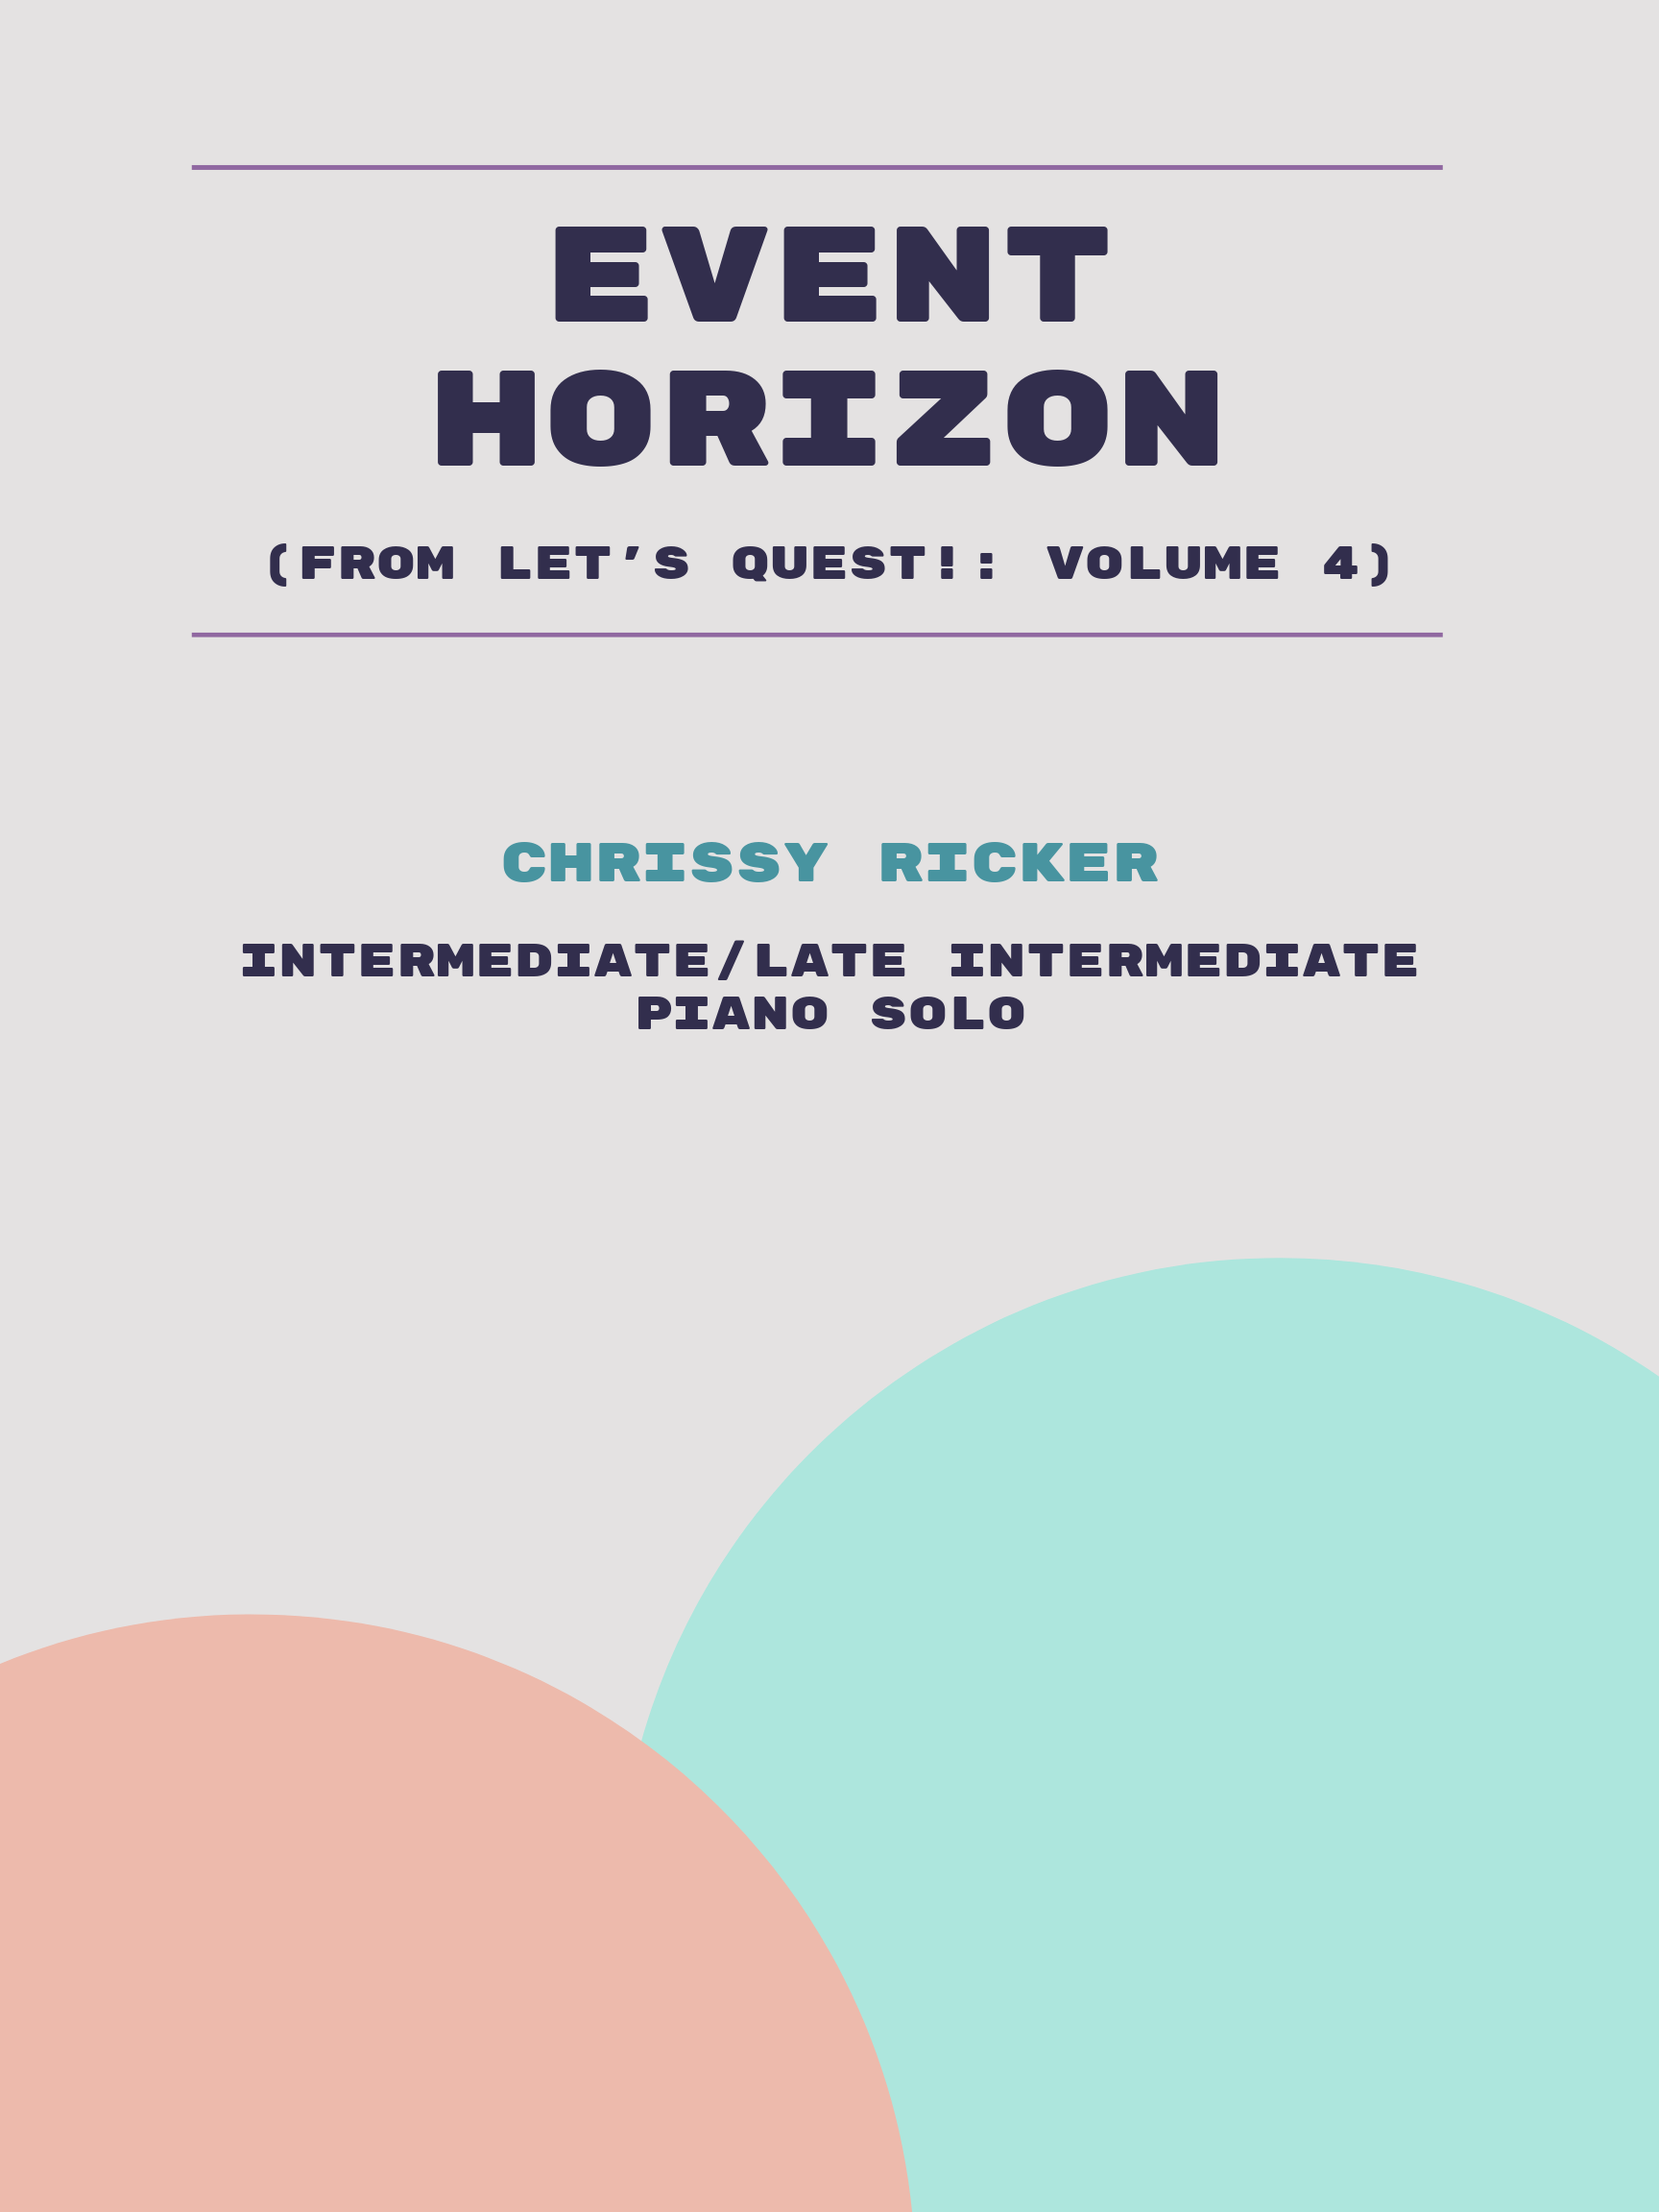 Event Horizon Sample Page